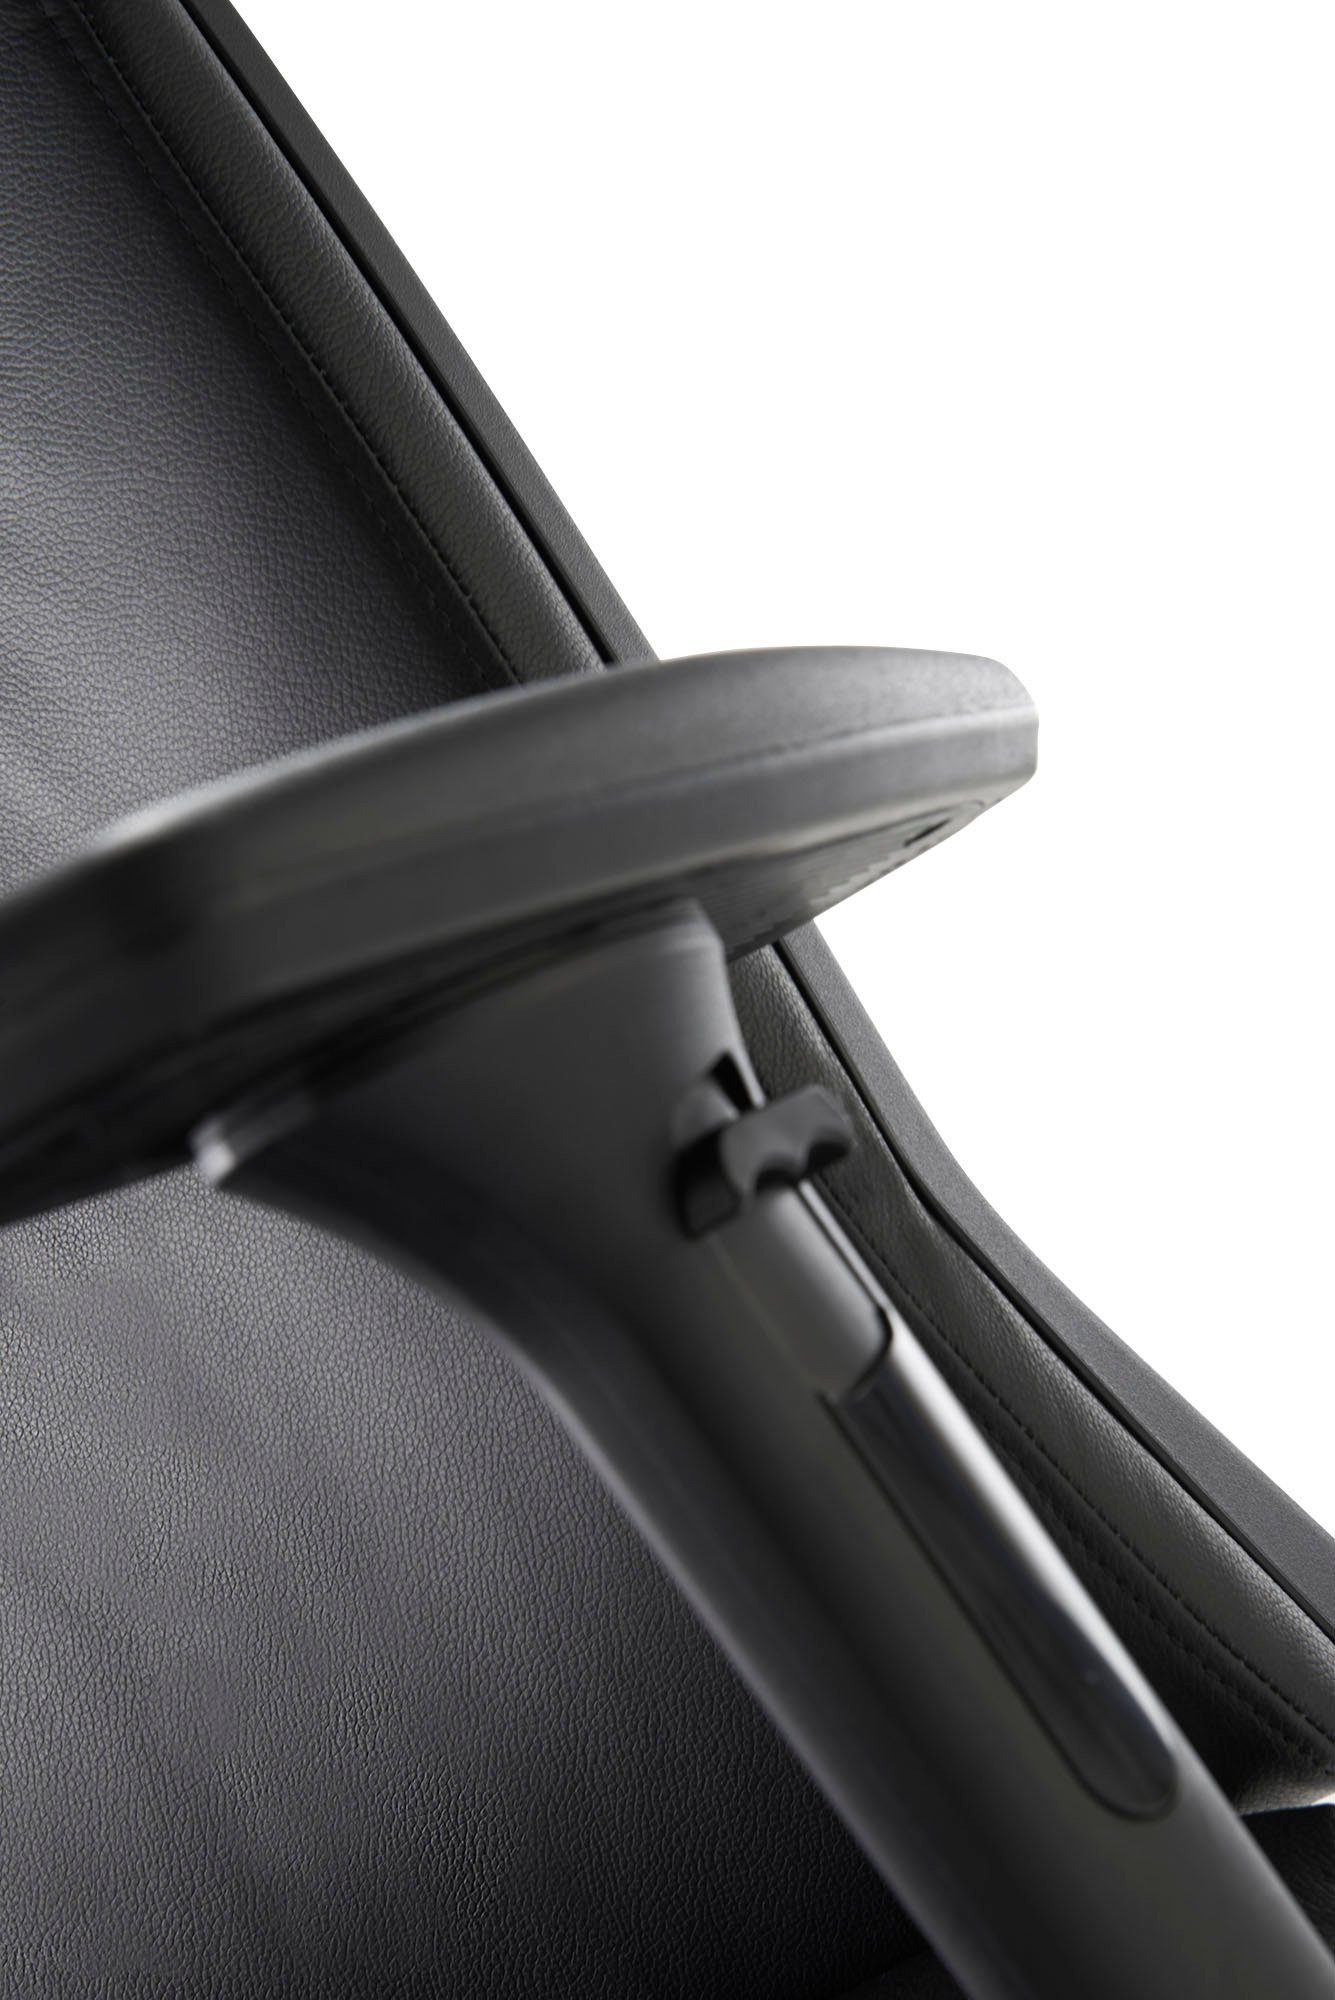 LINE, Mayer verstellbar, Chefsessel Drehstuhl Kopfstütze myCONTRACT verstellbare 7-fach Rückenhöhe Sitzmöbel